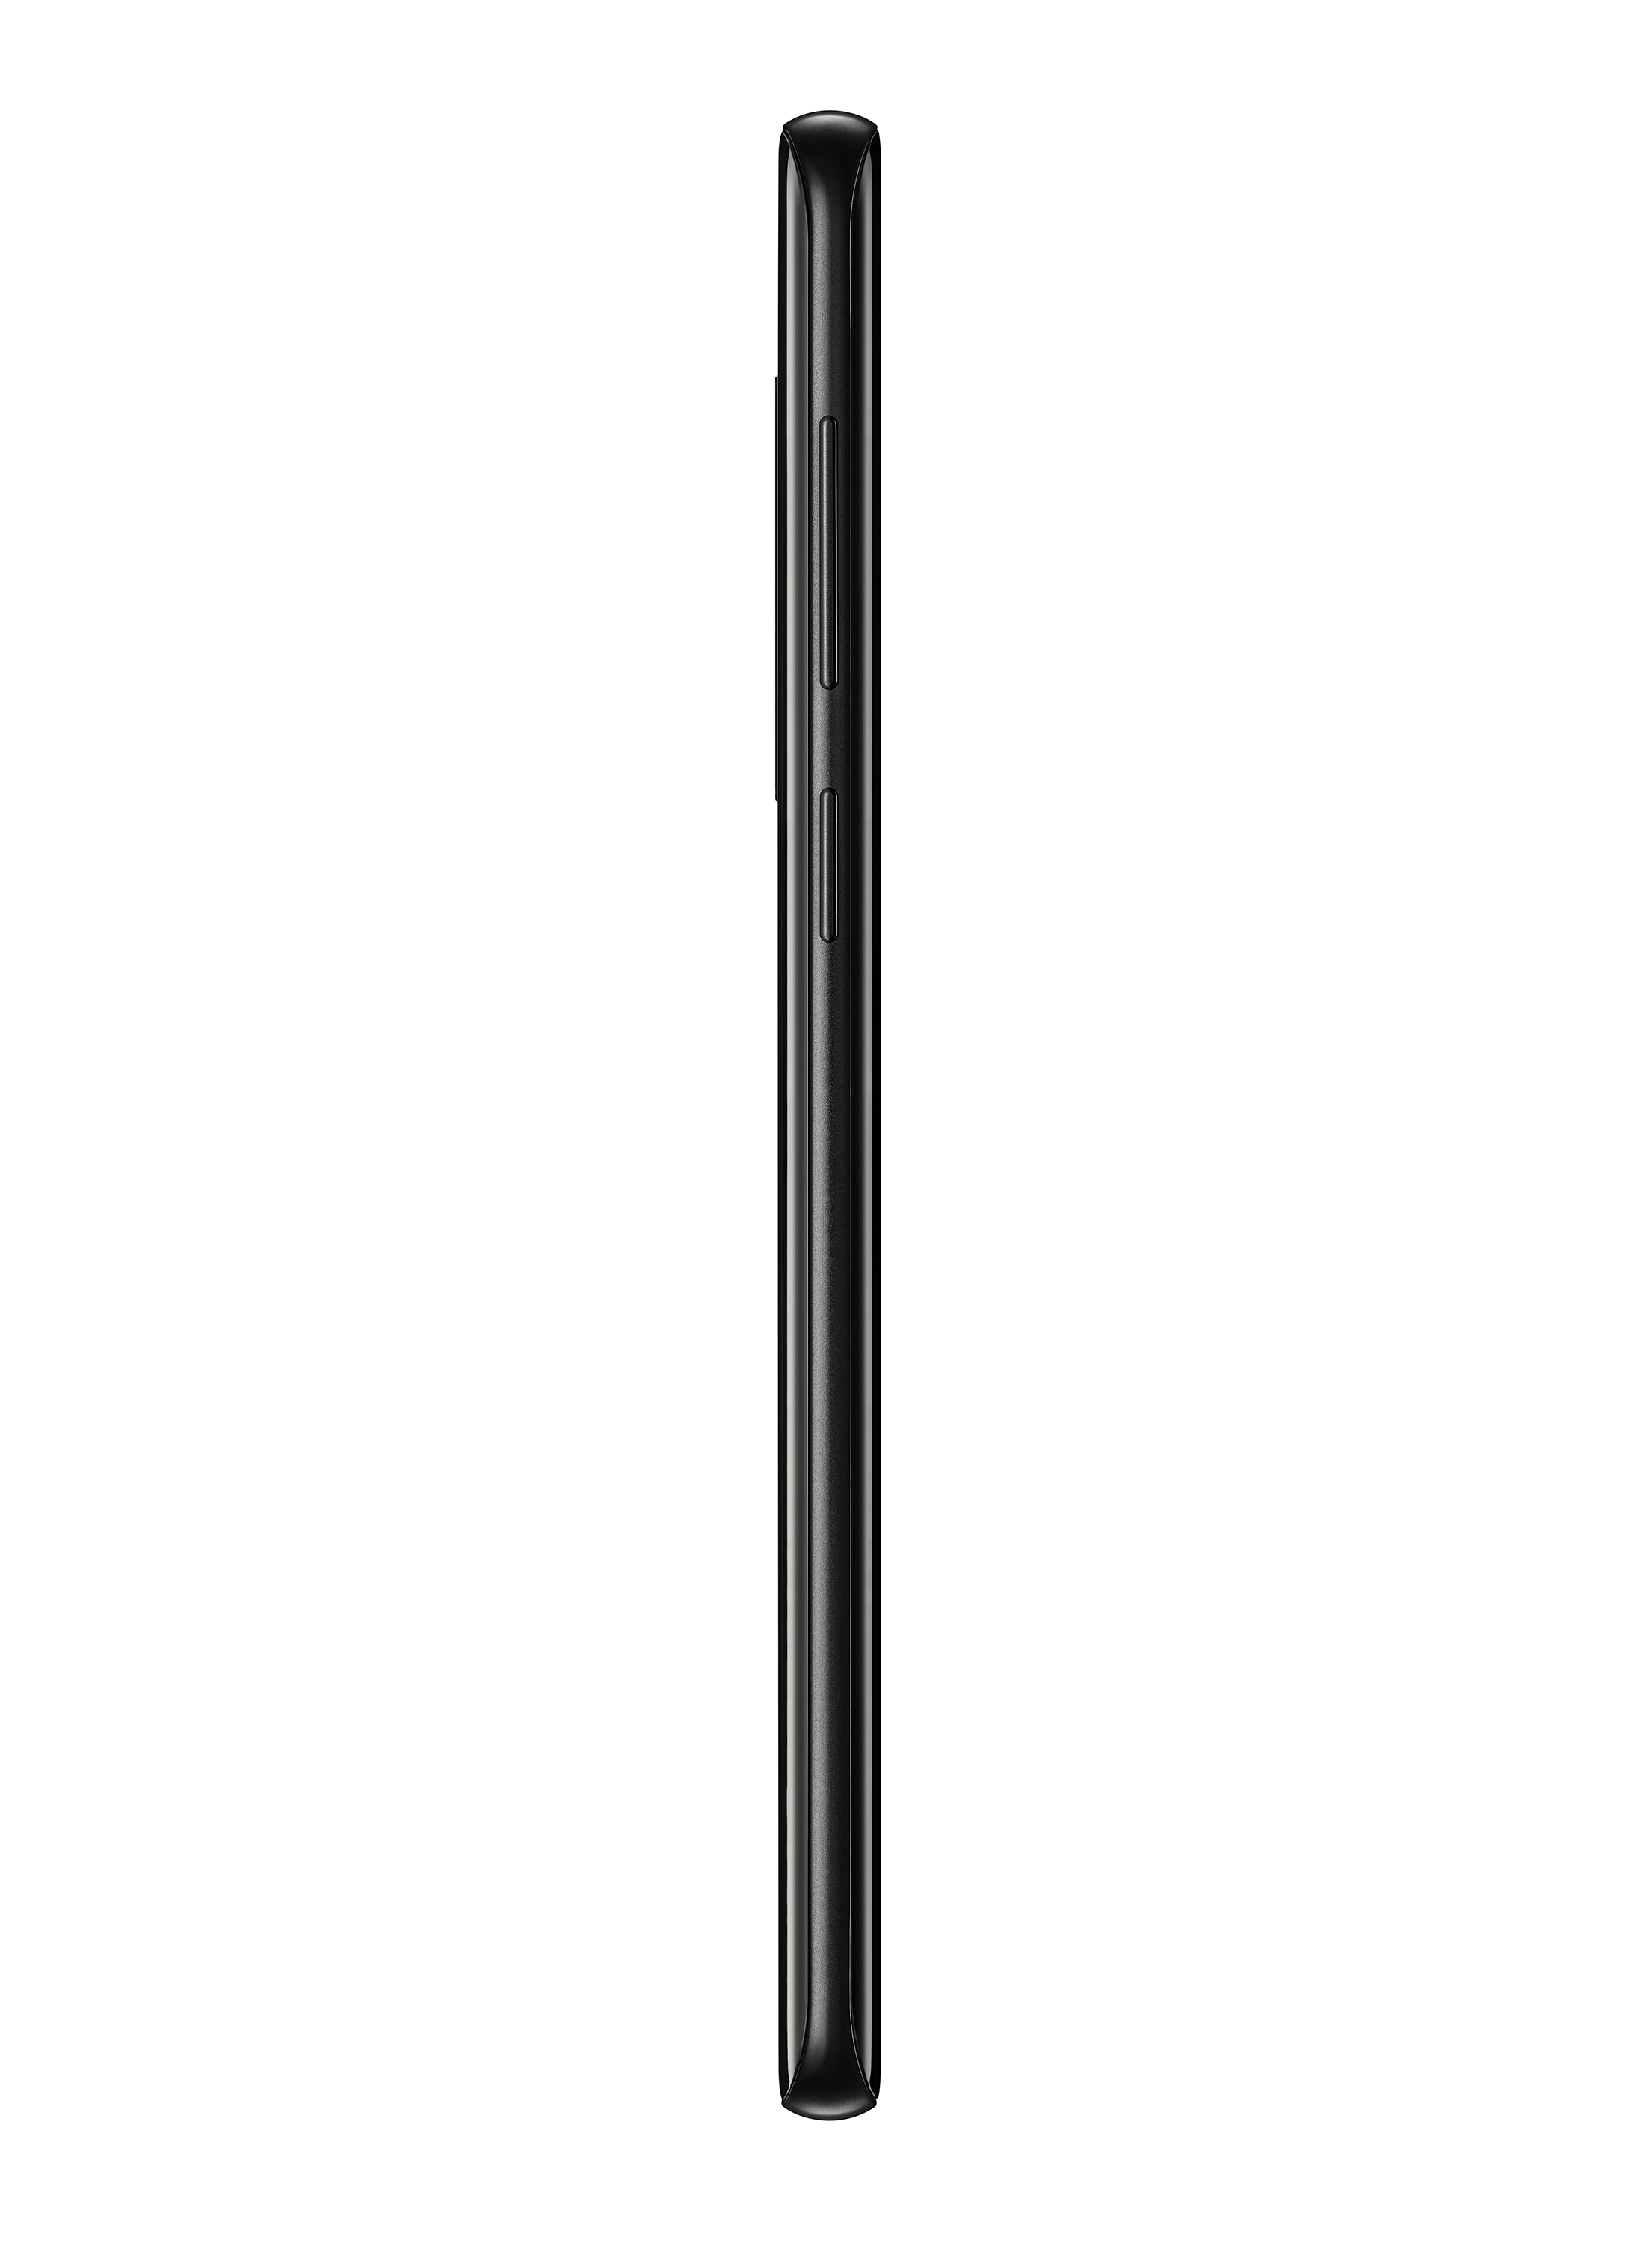 SAMSUNG Galaxy S9+ 64gb Unlocked Smartphone, Black - image 5 of 5